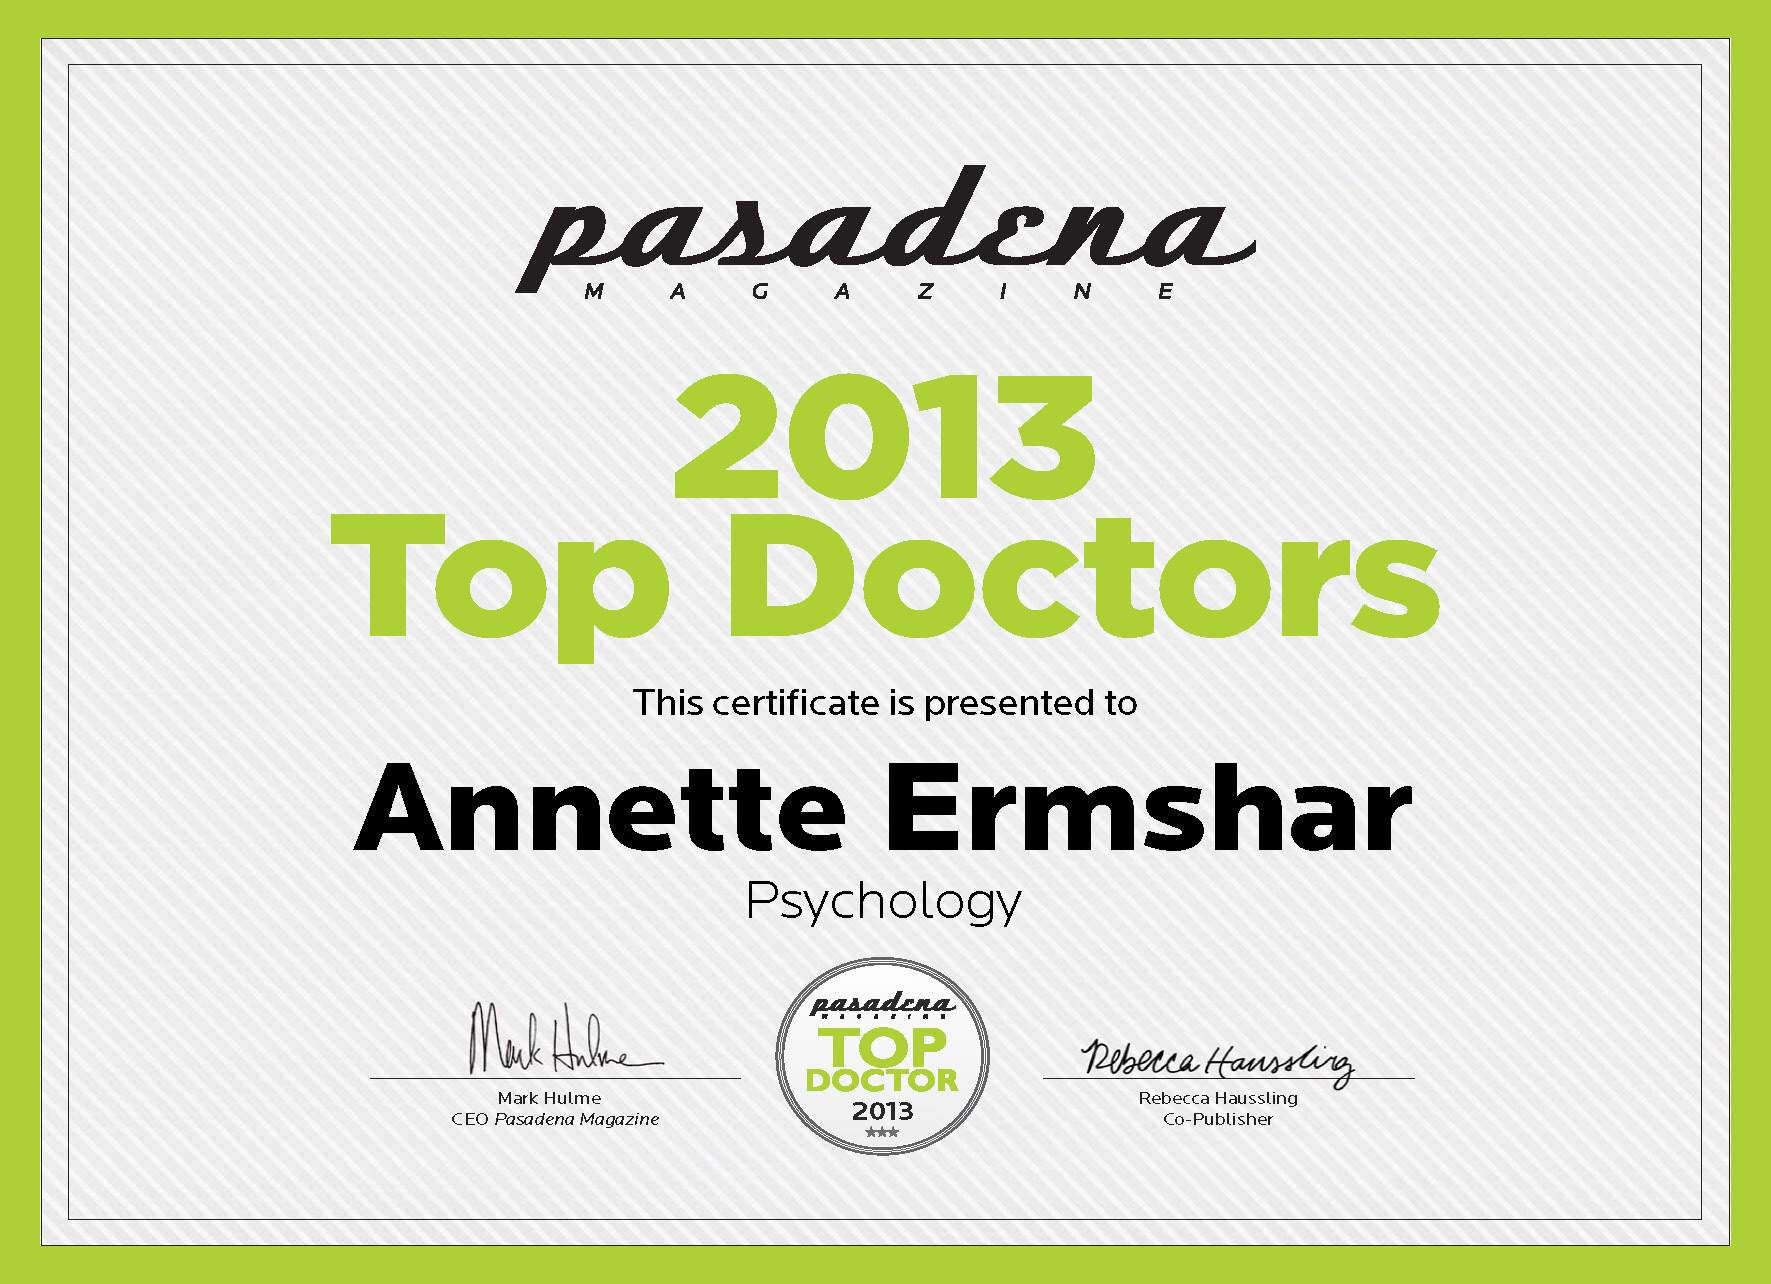 Top Doctor Award - 2013